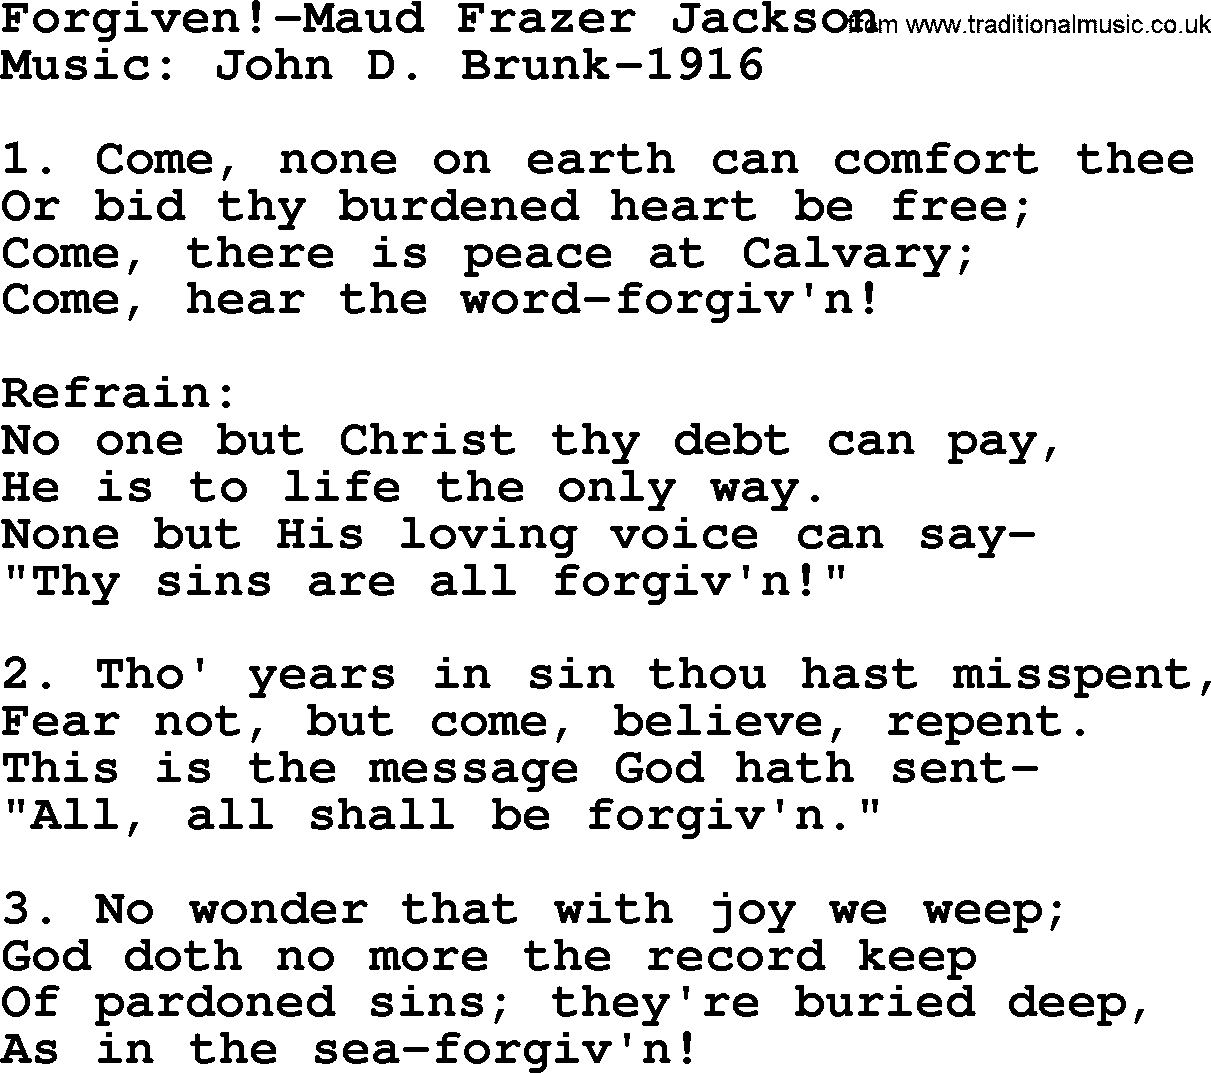 Forgiveness hymns, Hymn: Forgiven!-Maud Frazer Jackson, lyrics with PDF